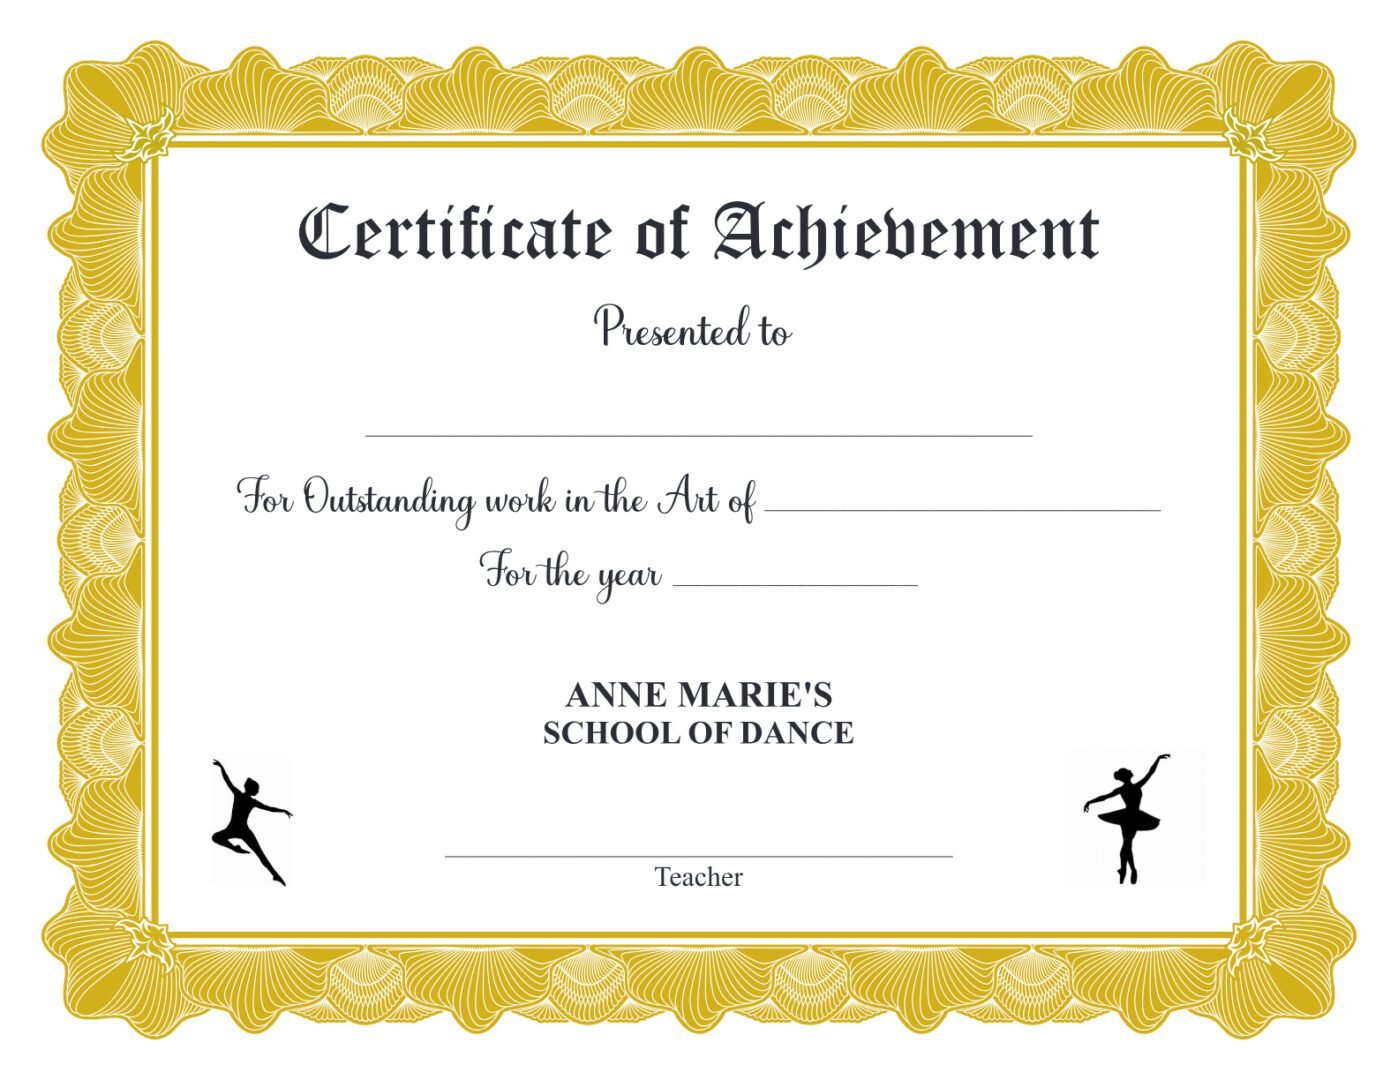 A certificate of achievement for a dance class.